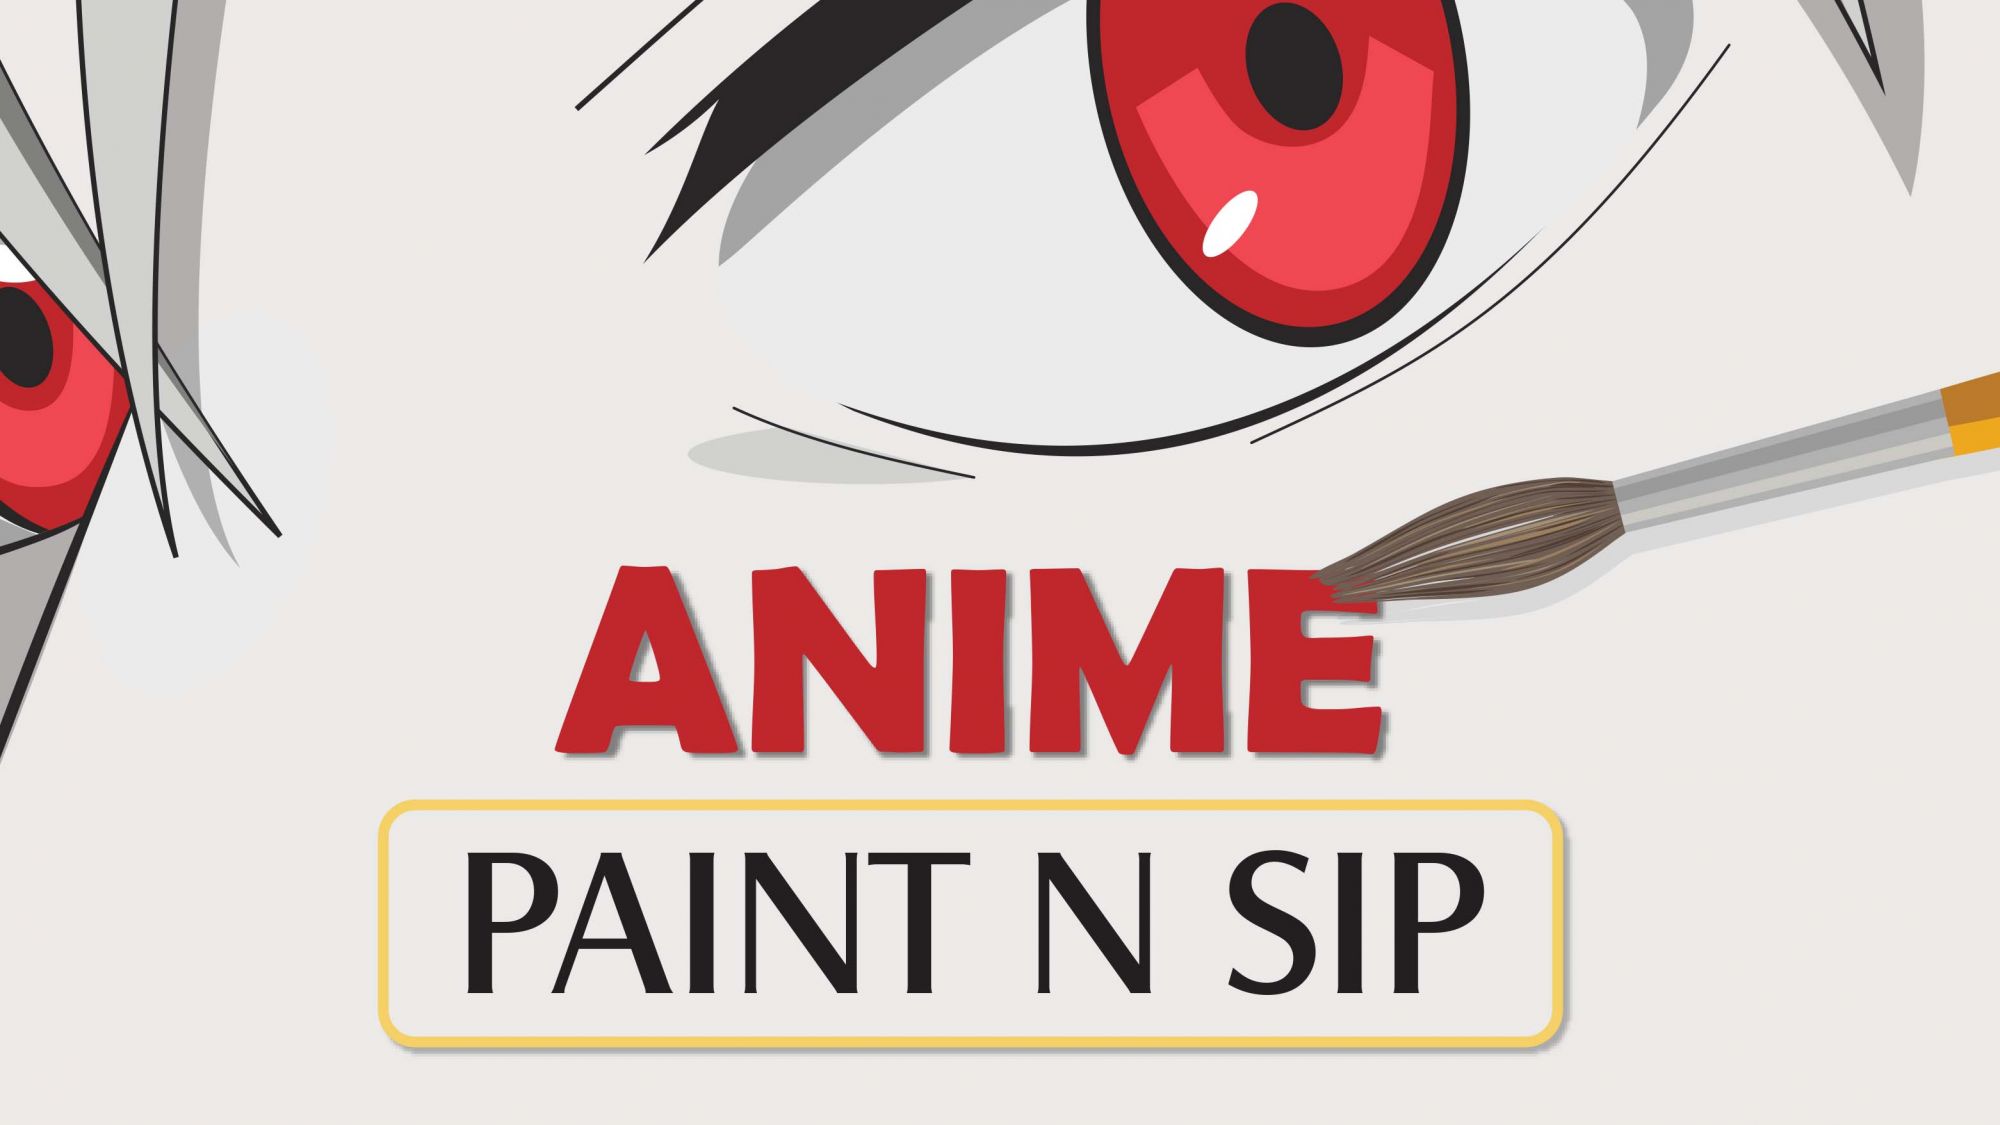 Anime character taking a big sip : r/MemeTemplatesOfficial